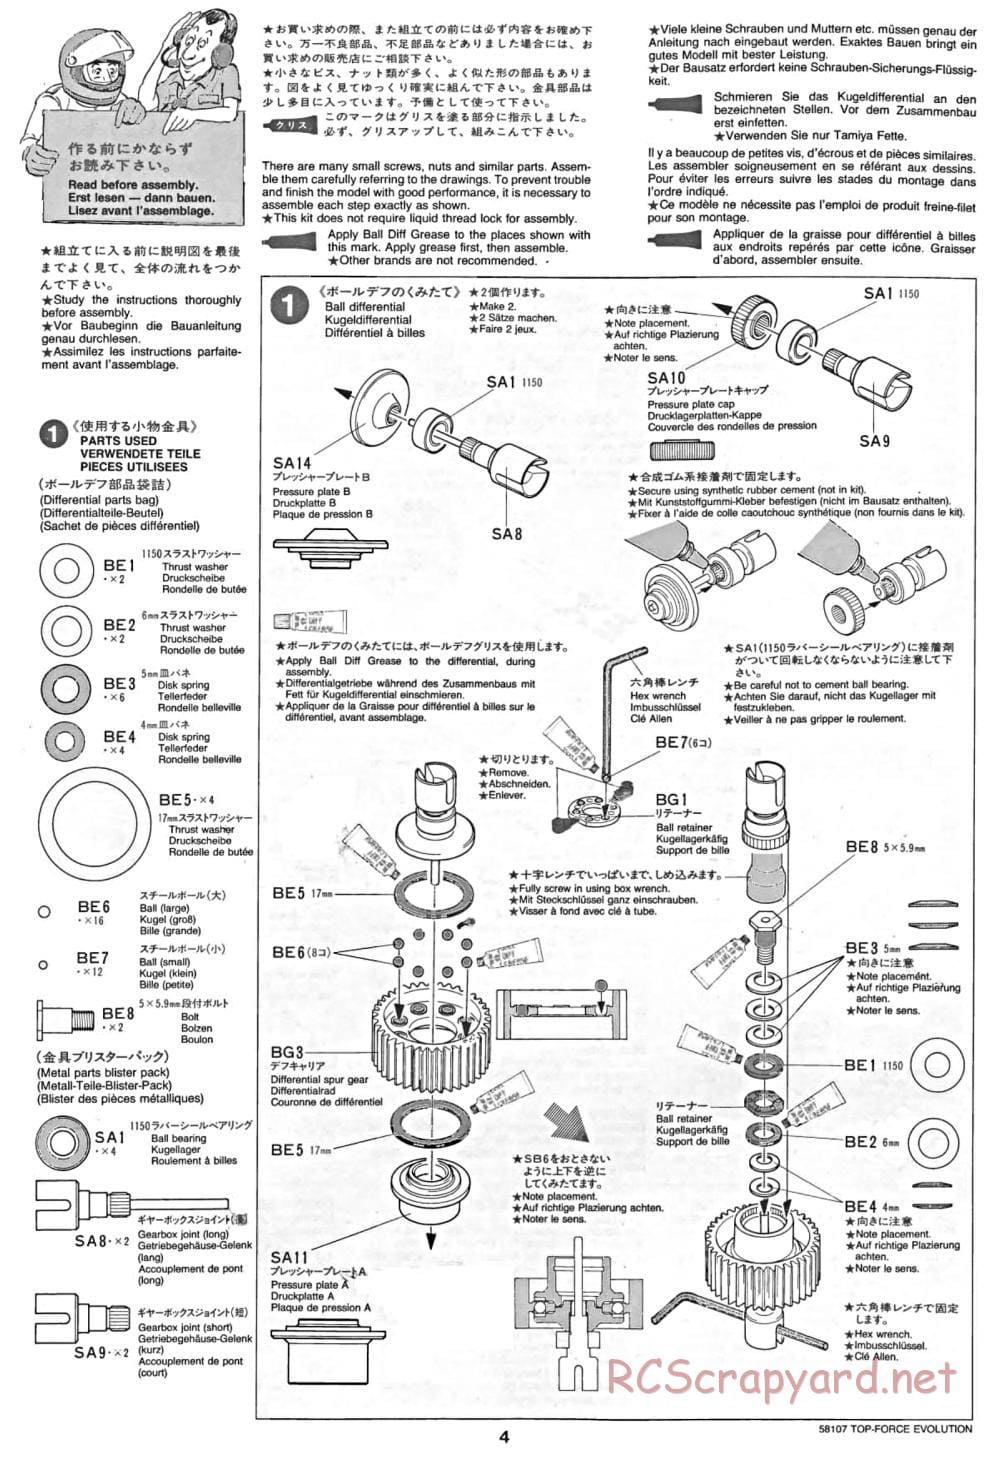 Tamiya - Top Force Evolution Chassis - Manual - Page 4